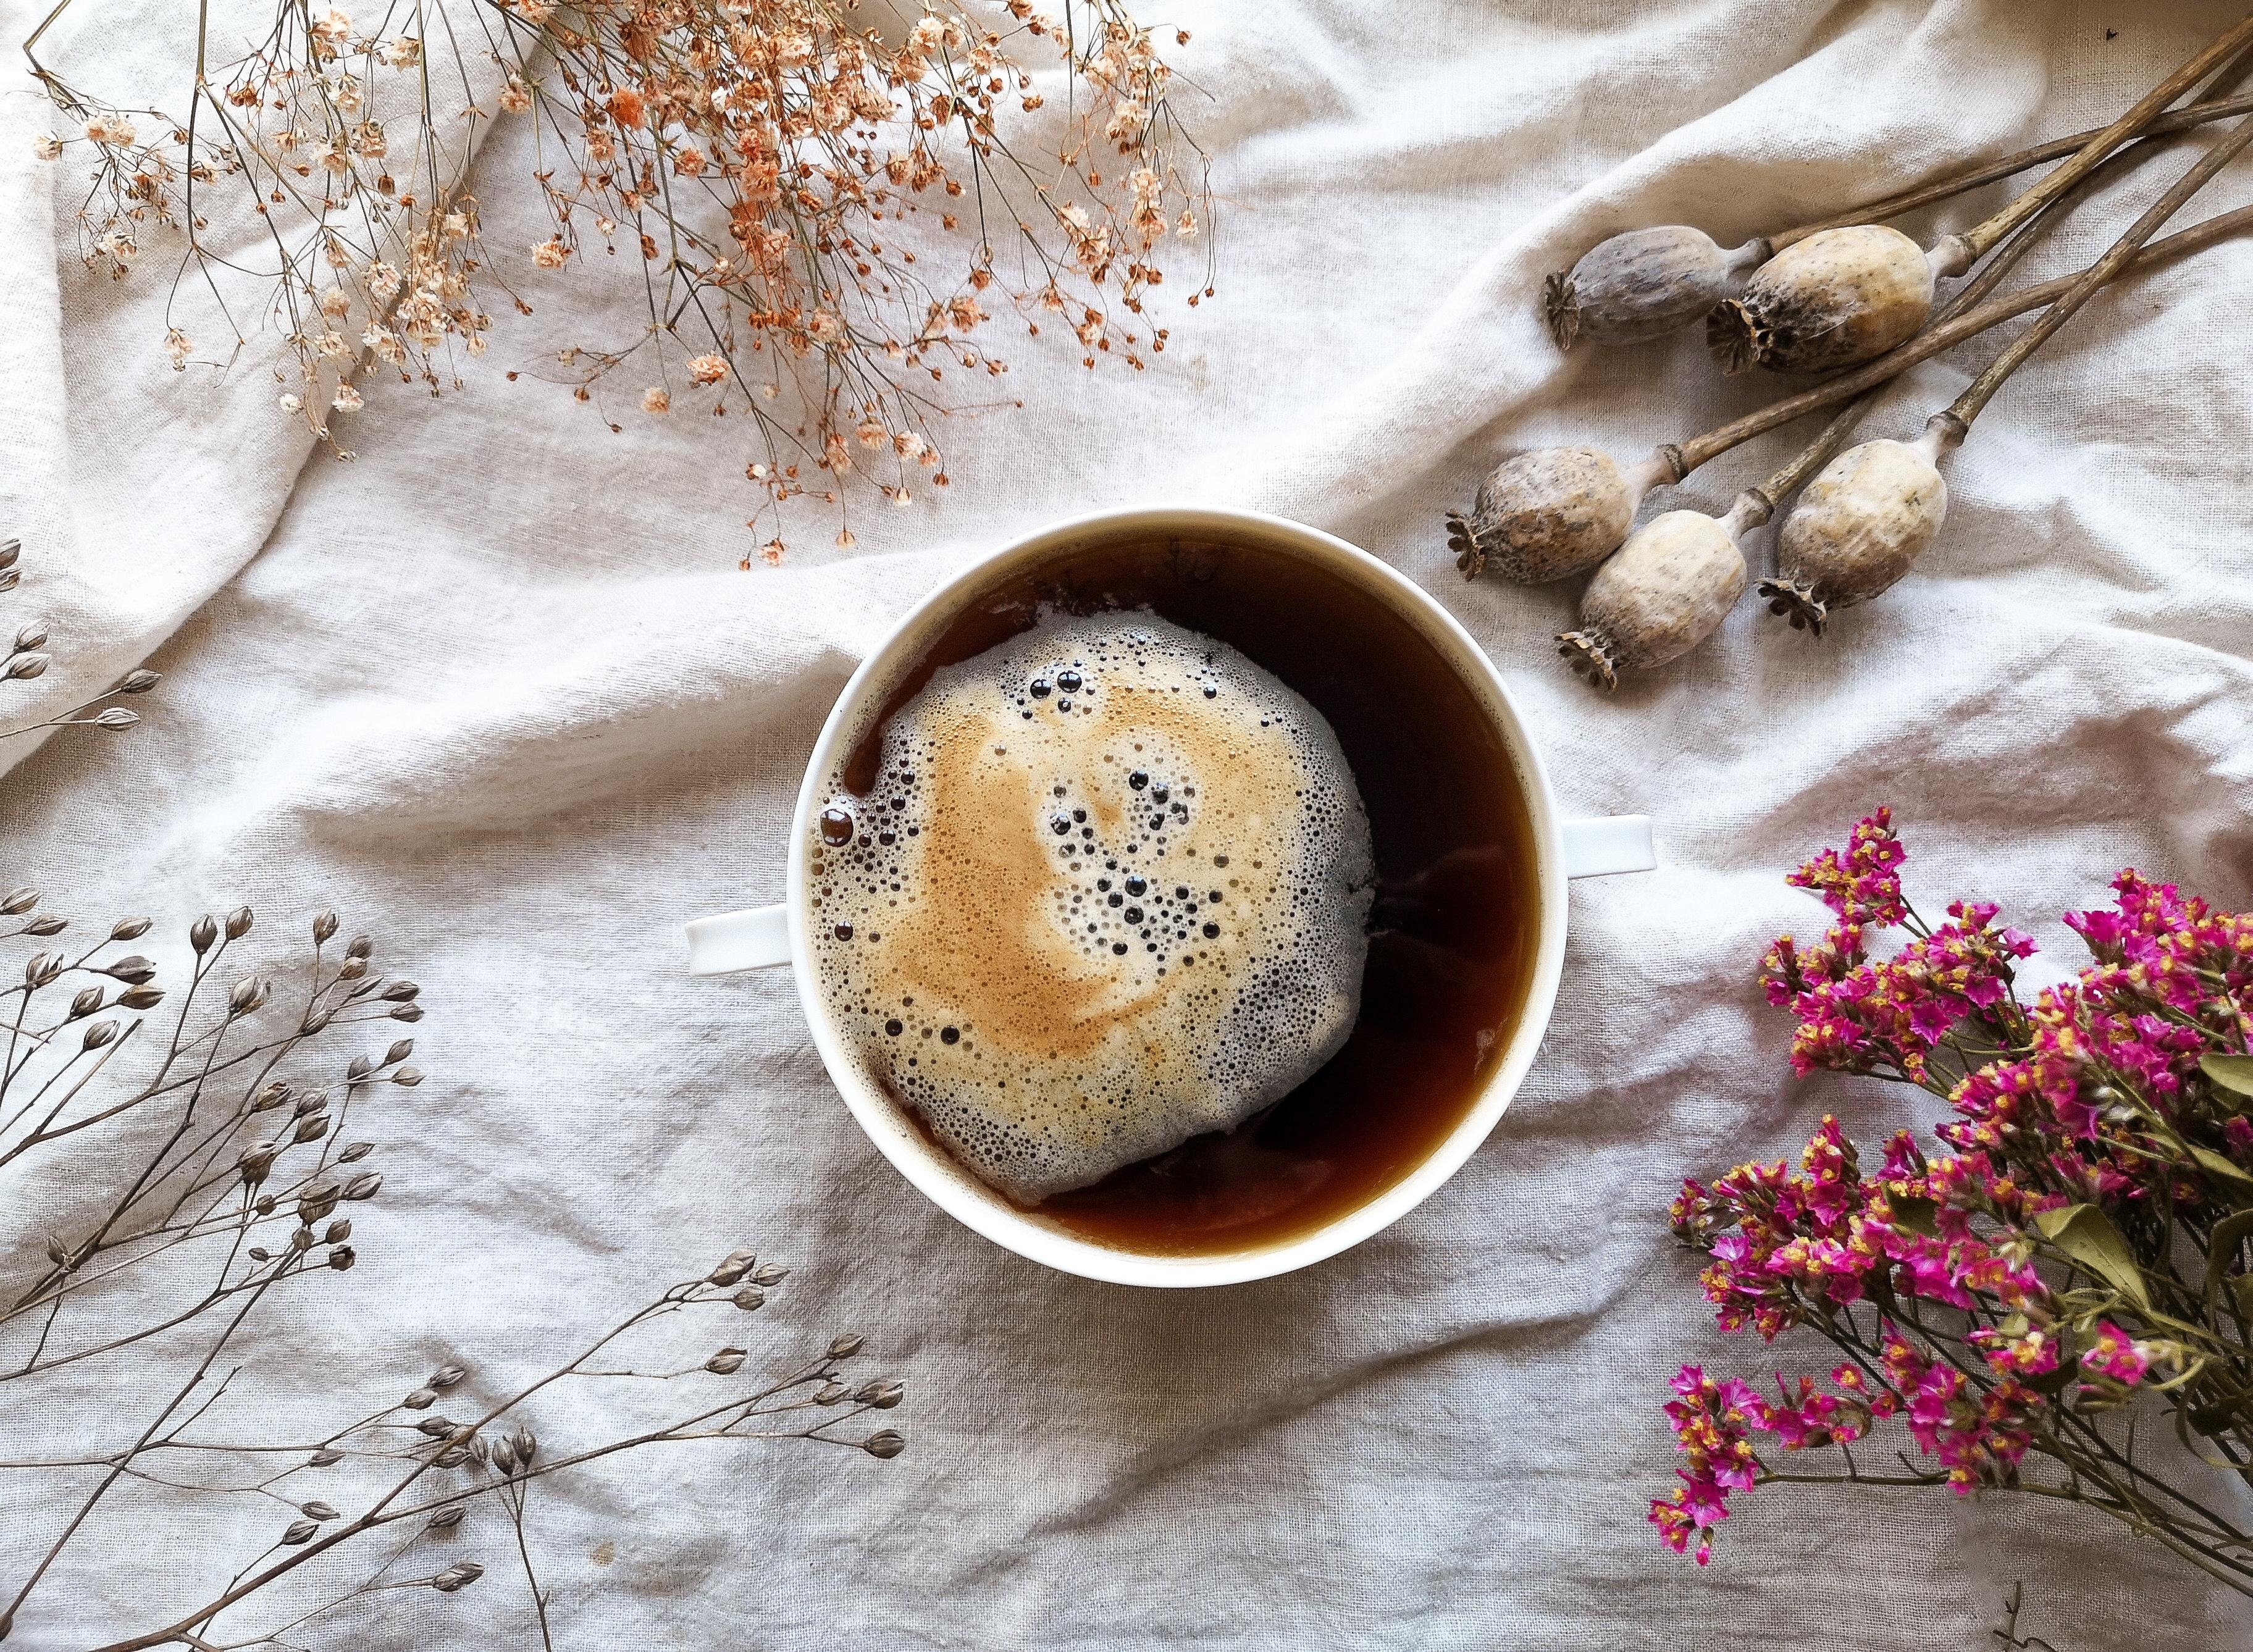 ♡ Kaffeeliebe ♡

#livingchallenge #kaffeeliebe #coffeelover #flowers #driedflowers 